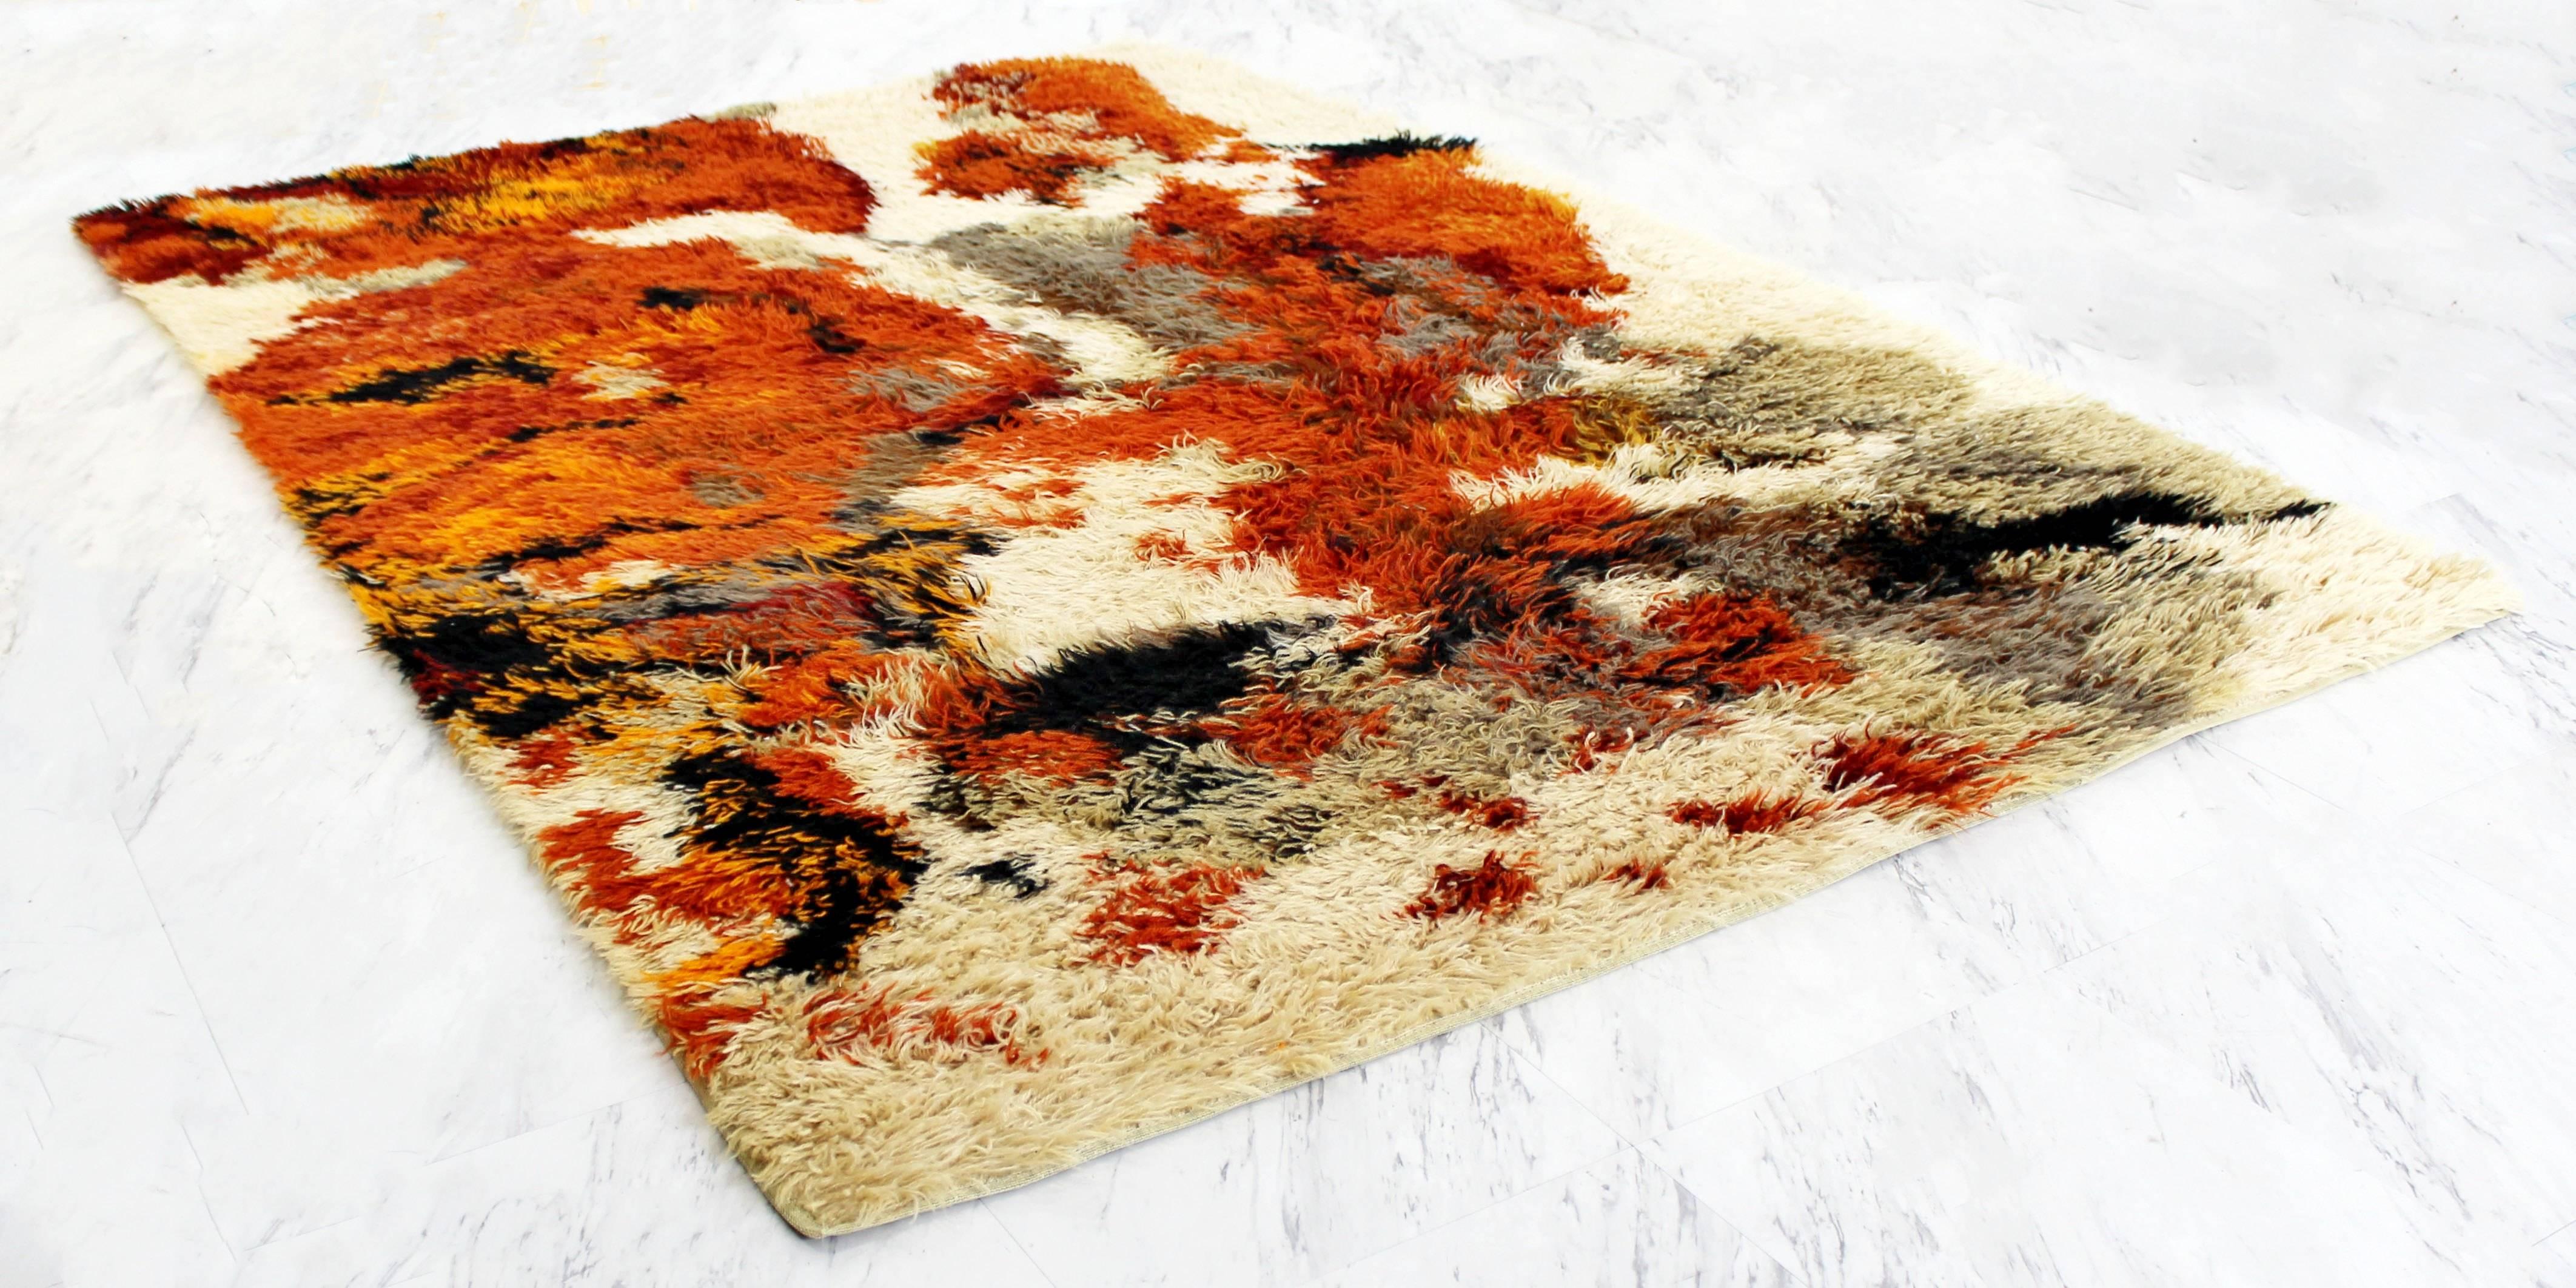 American Mid-Century Modern Orange Red Gray Shag Rya Area Rug Carpet, 1970s